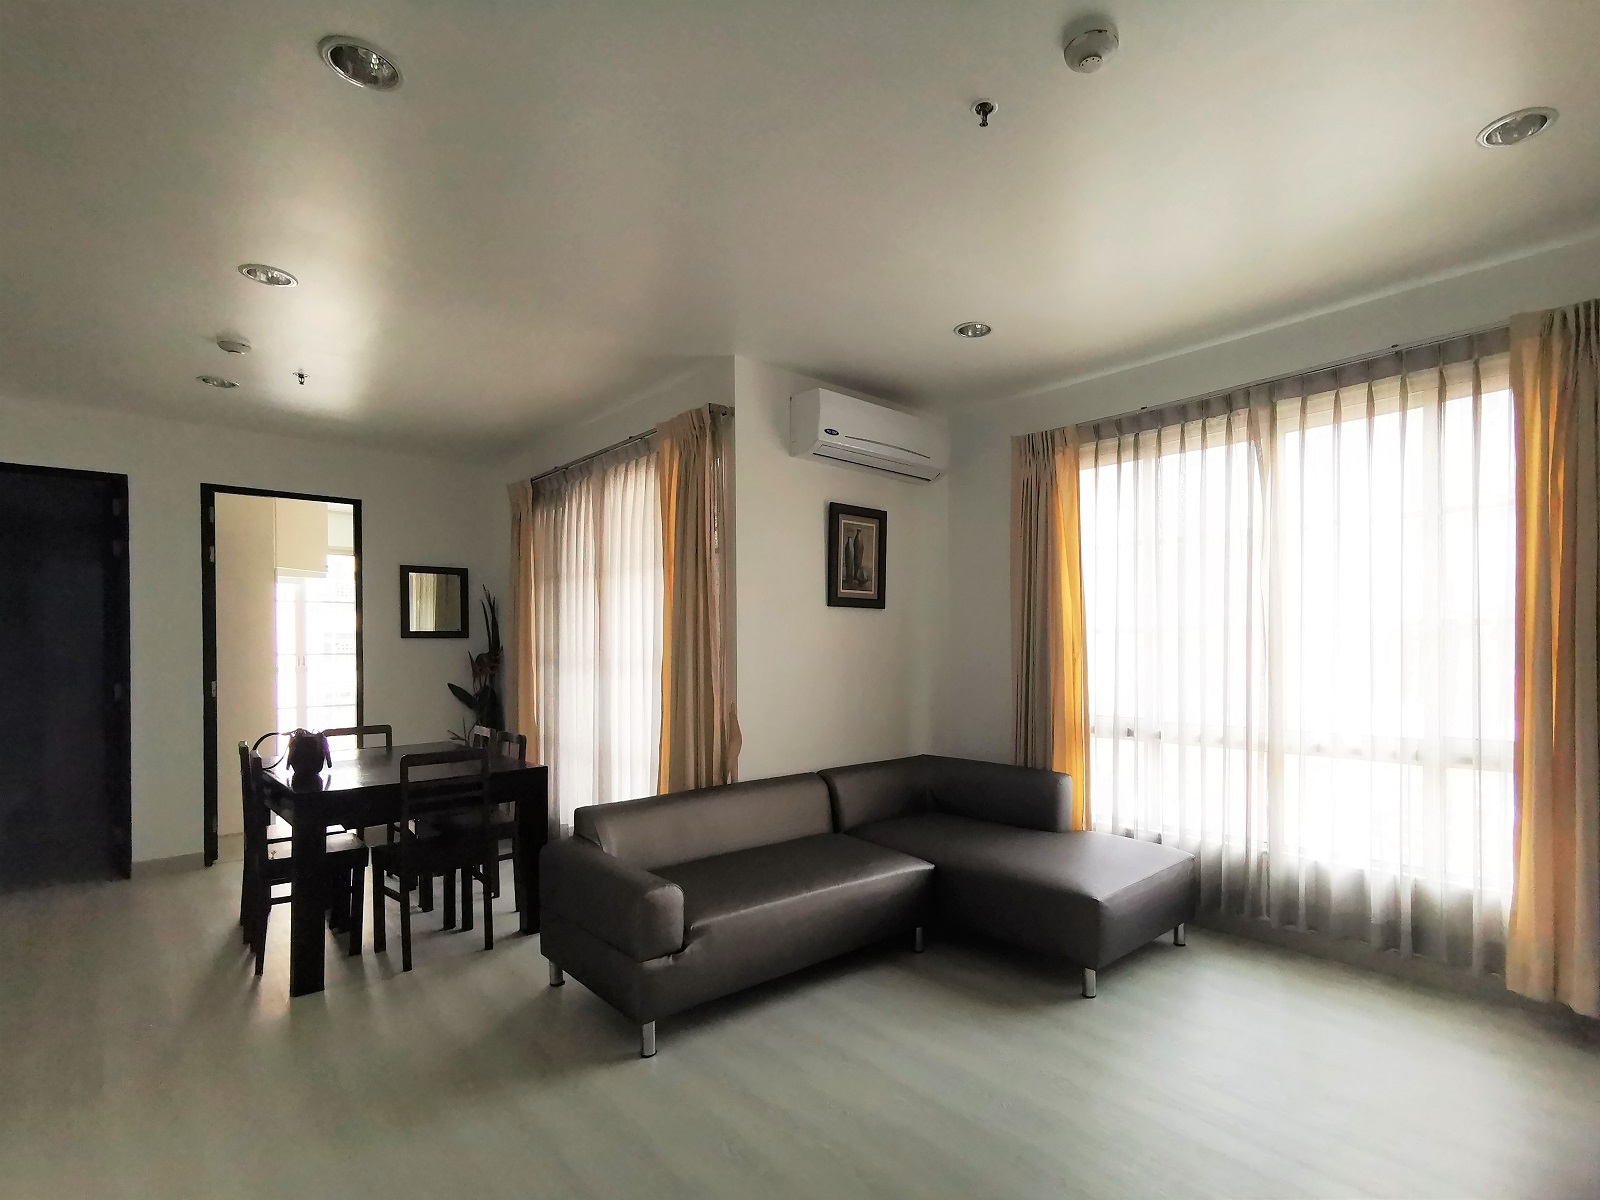 2-bedroom apartment in Sukhumvit 18 for sale - renovated - low floor - CitiSmart